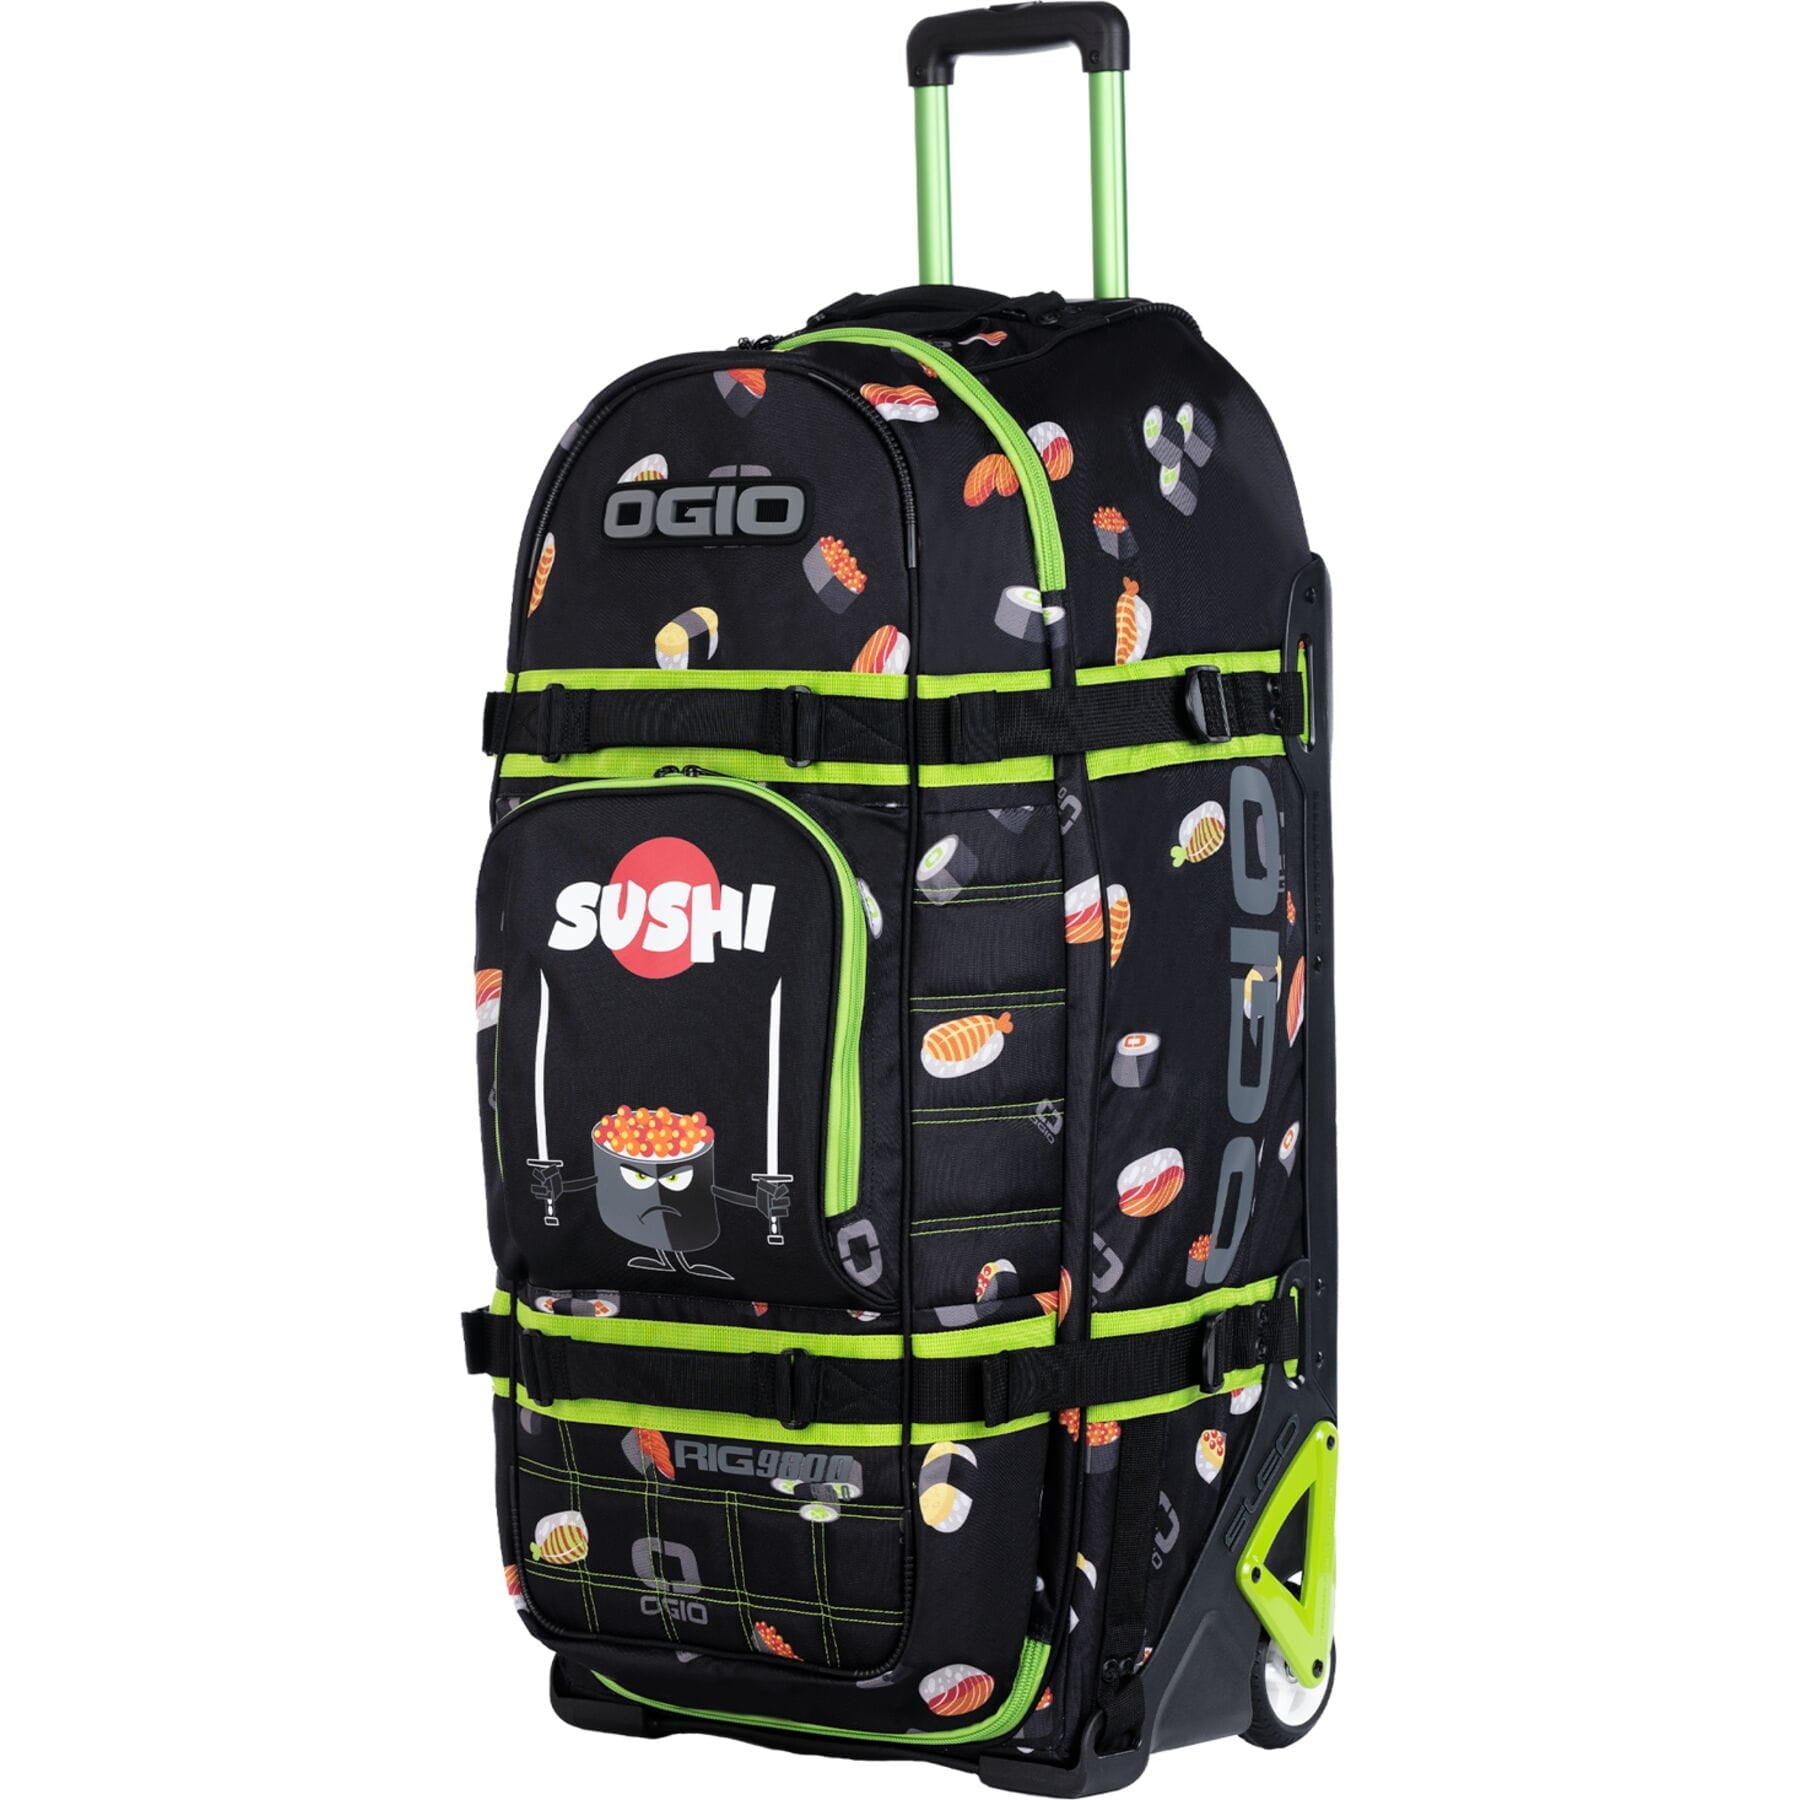 Ogio Rig 9800 PRO Gear Bag Sushi